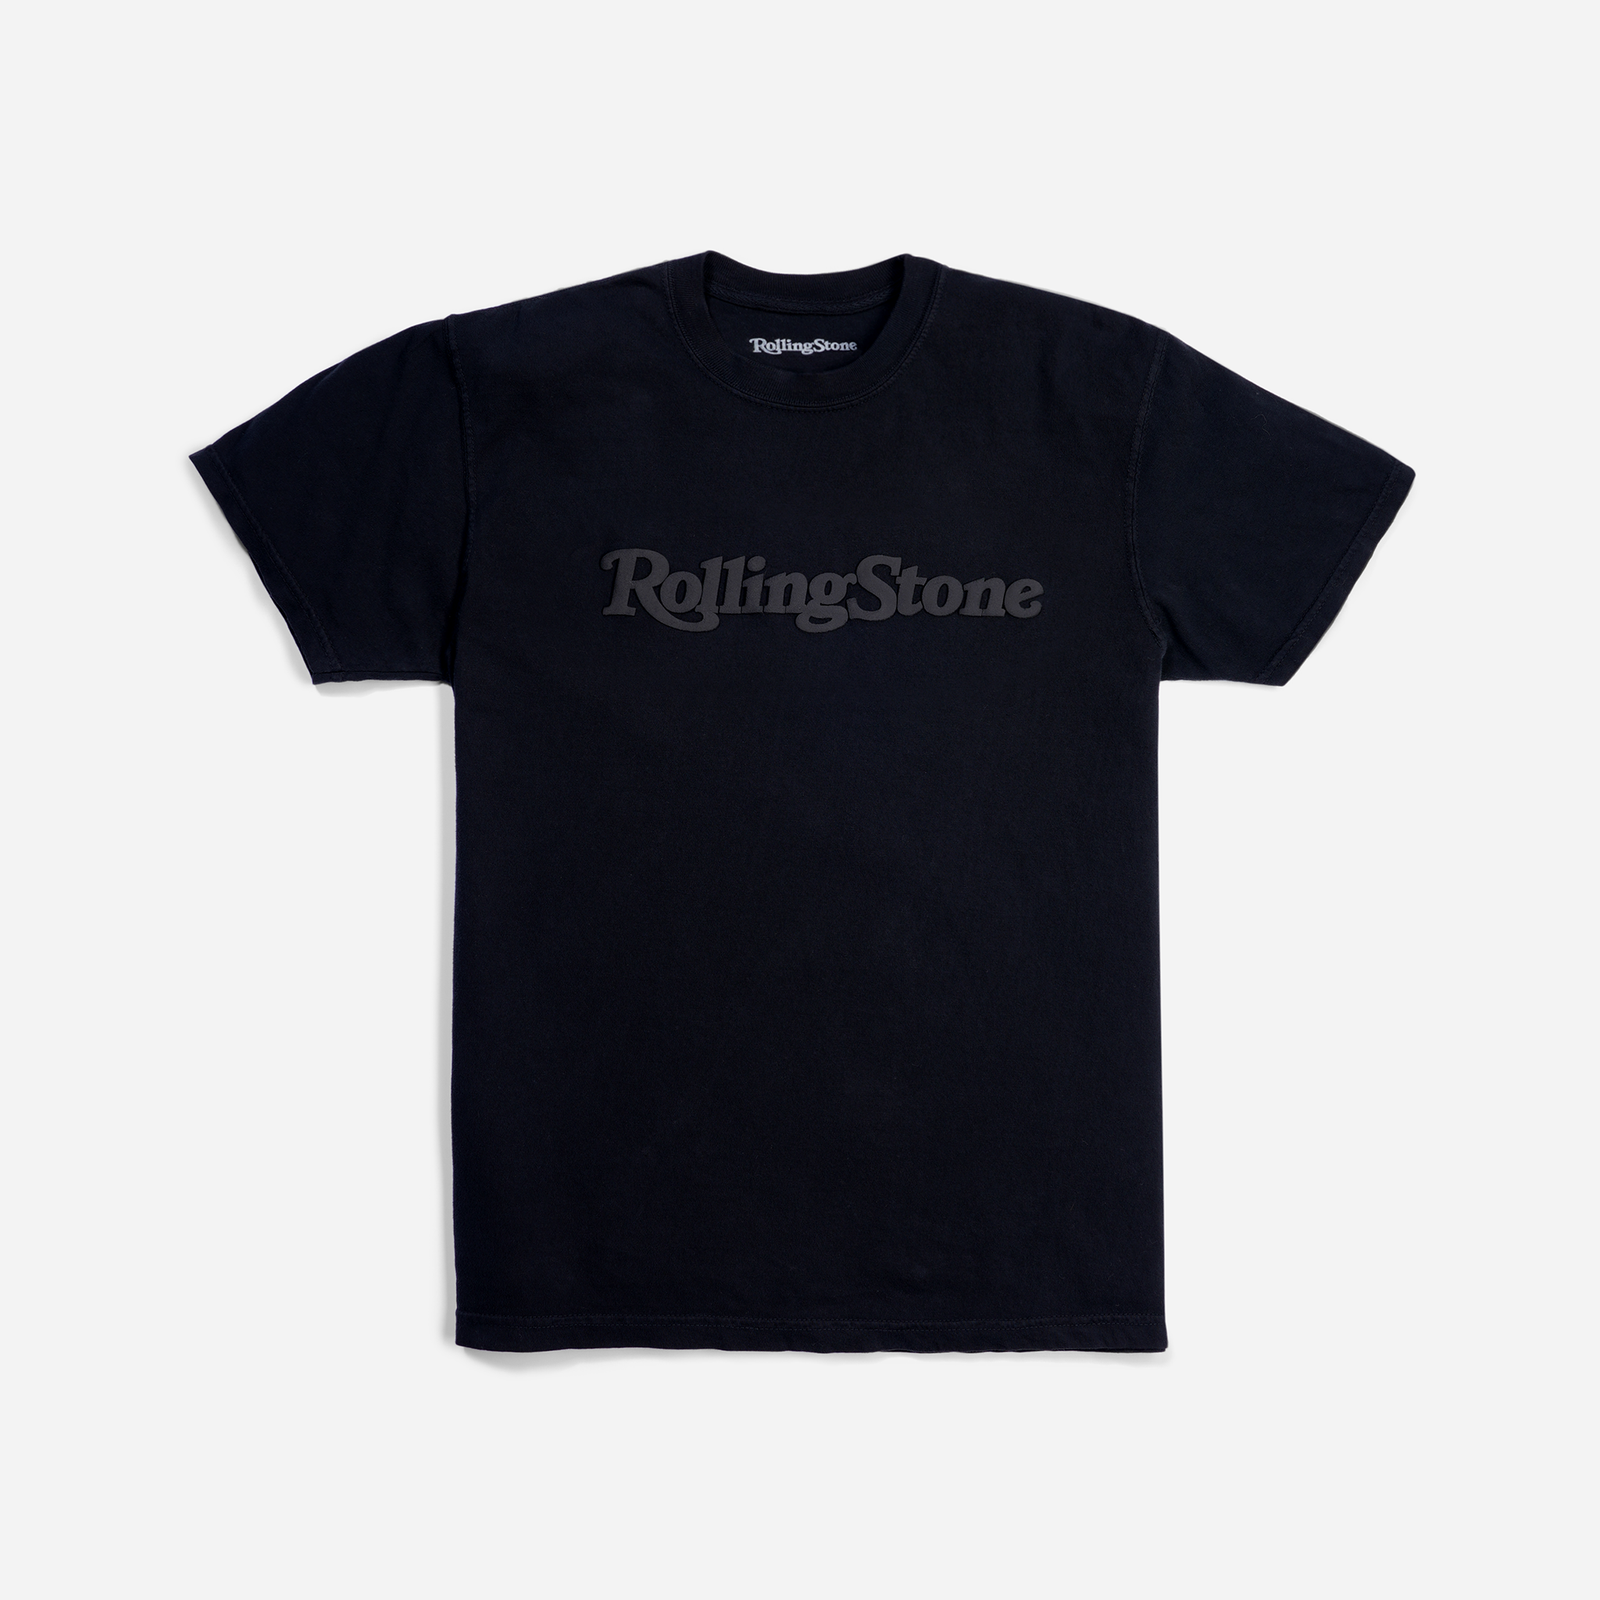 The Loyalist Official Rolling Stone Logo Sweatshirt: Modern Oversized Crewneck Gray M